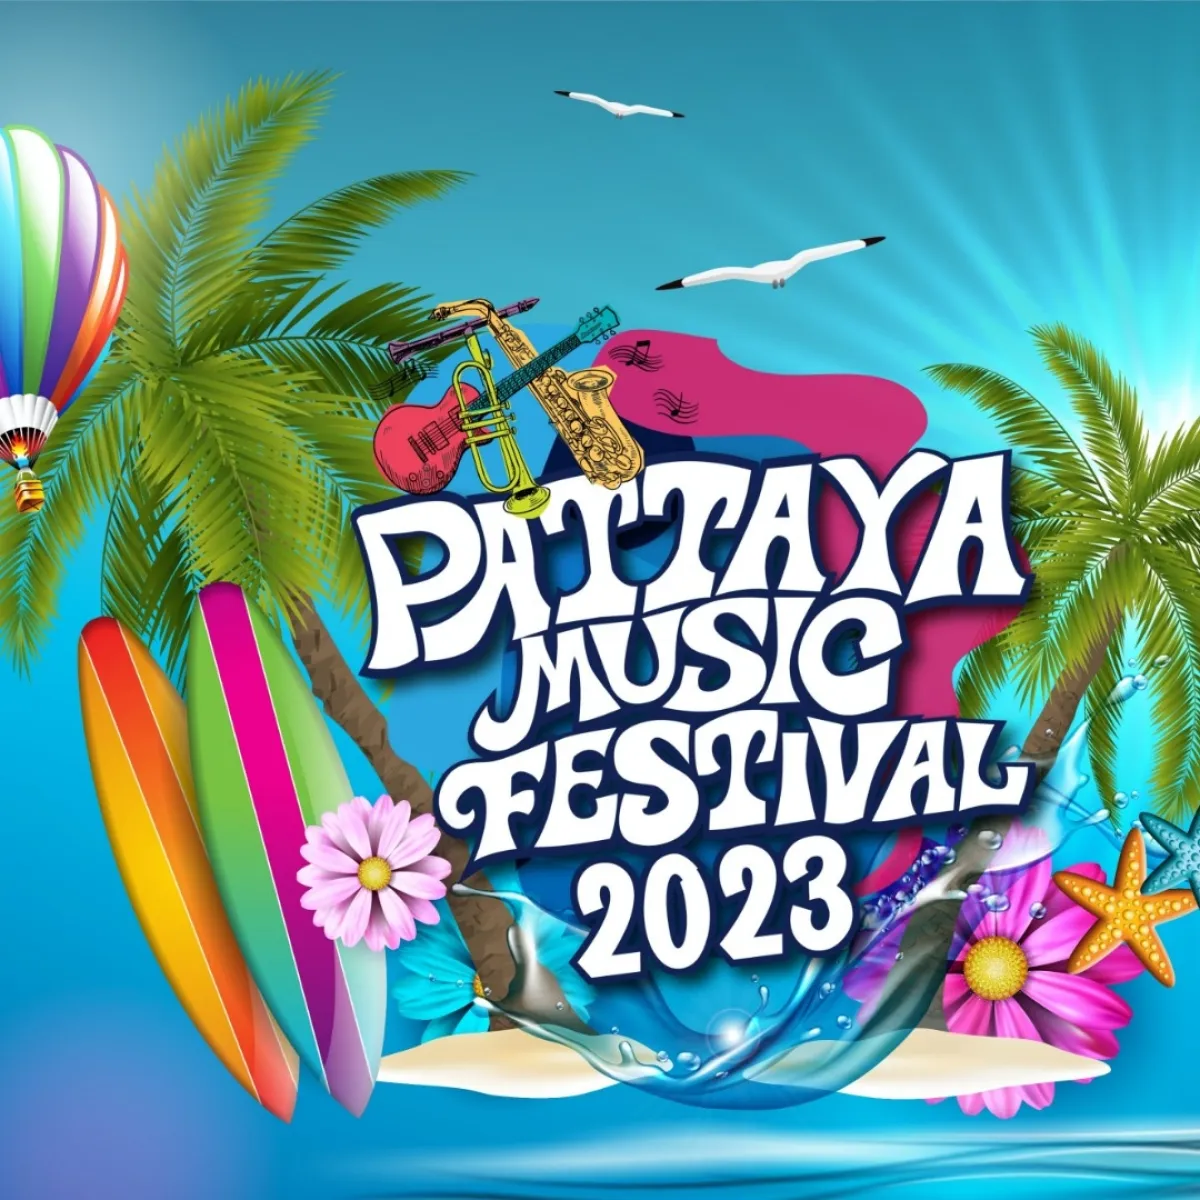 PATTAYA MUSIC FESTIVAL 2023